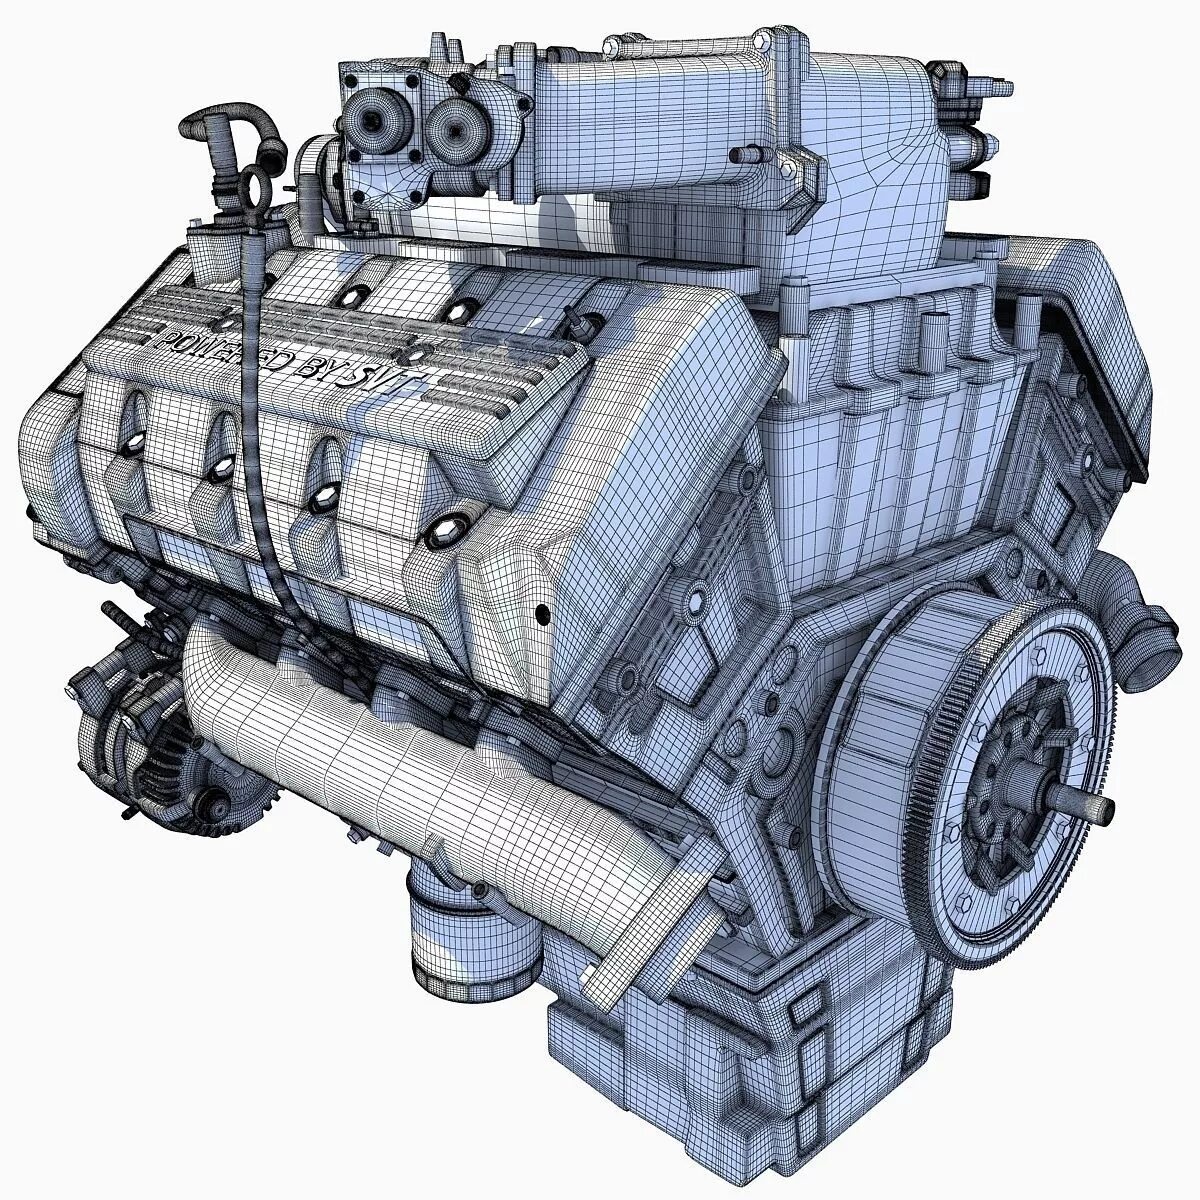 D3 d5. 3д модель двигателя 3д6. 3д модель двигателя FPT s30entm2. 3d Max двигатель модель. М1070 engine 3d model.